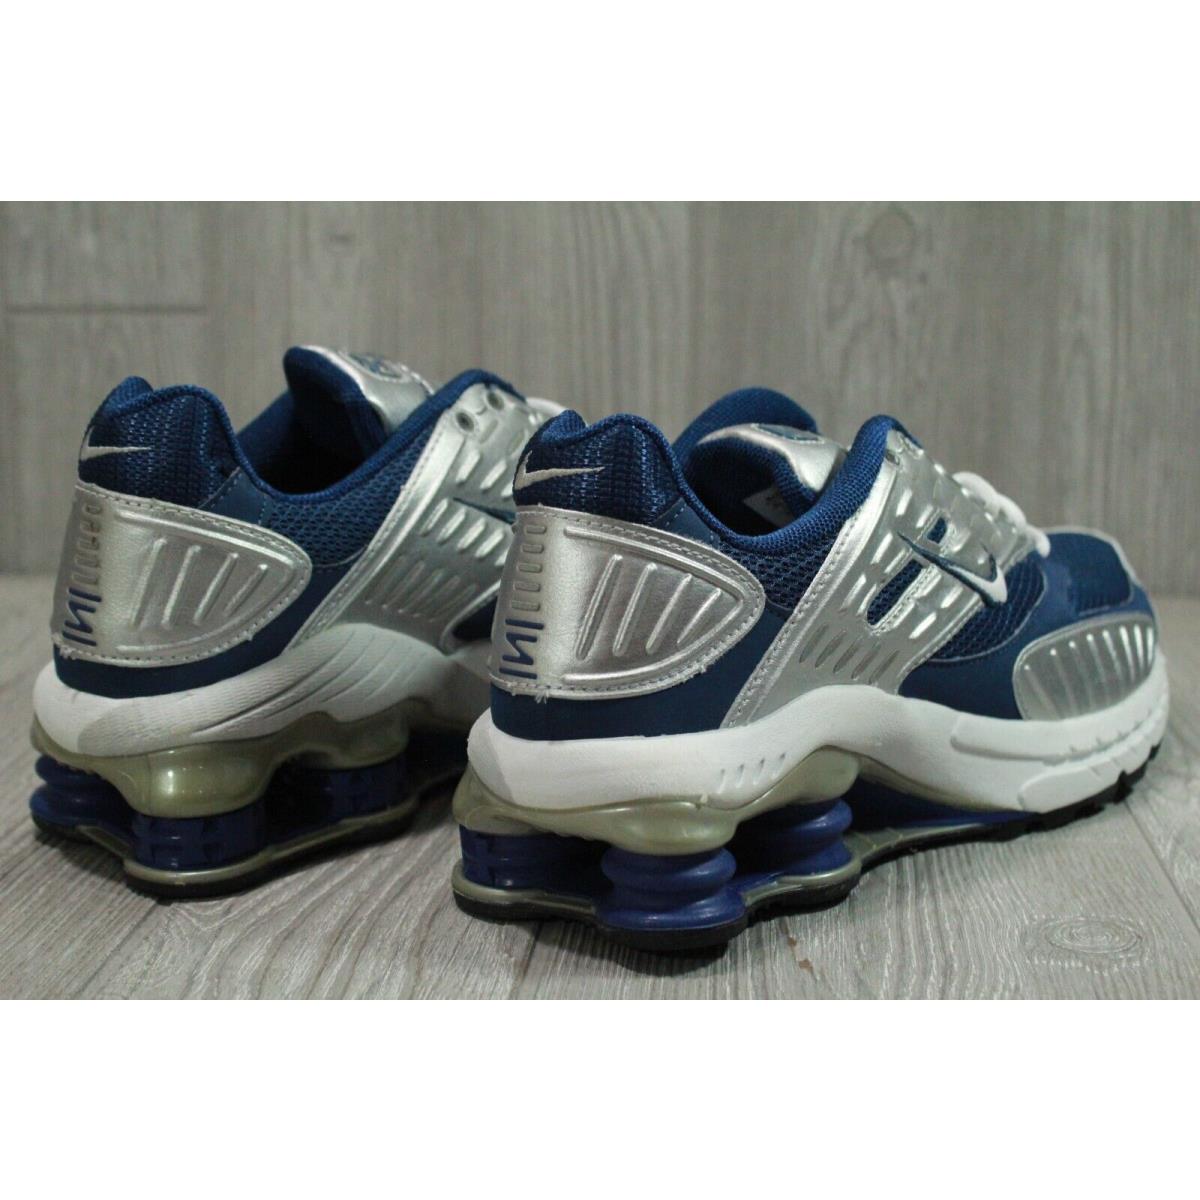 Nike shoes Shox - Blue 3